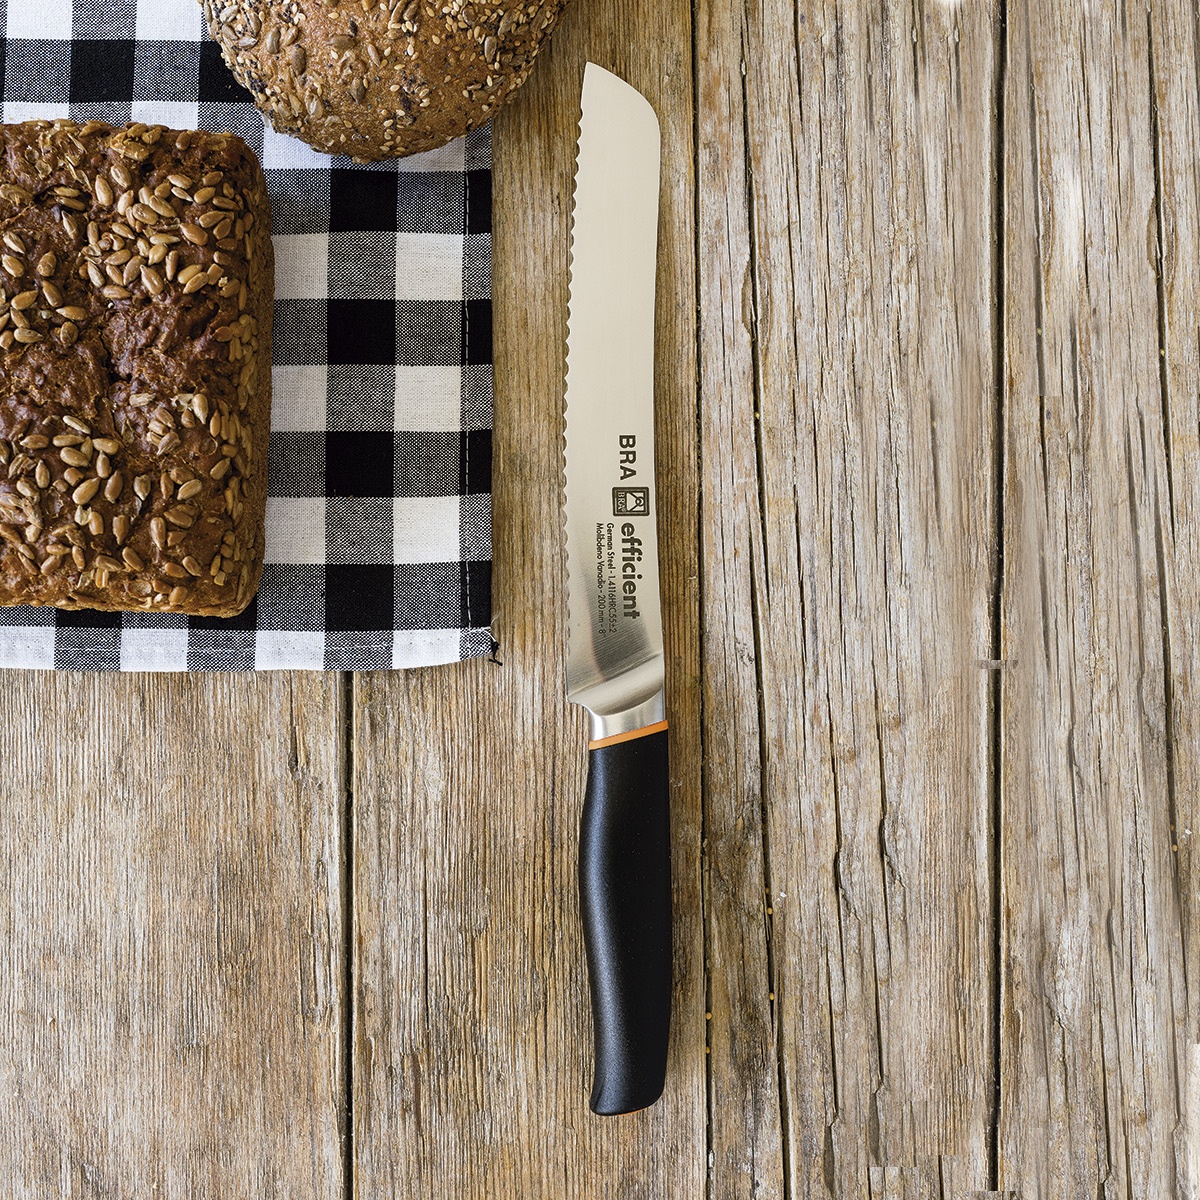 Cuchillo para Pan Efficient - Green Style